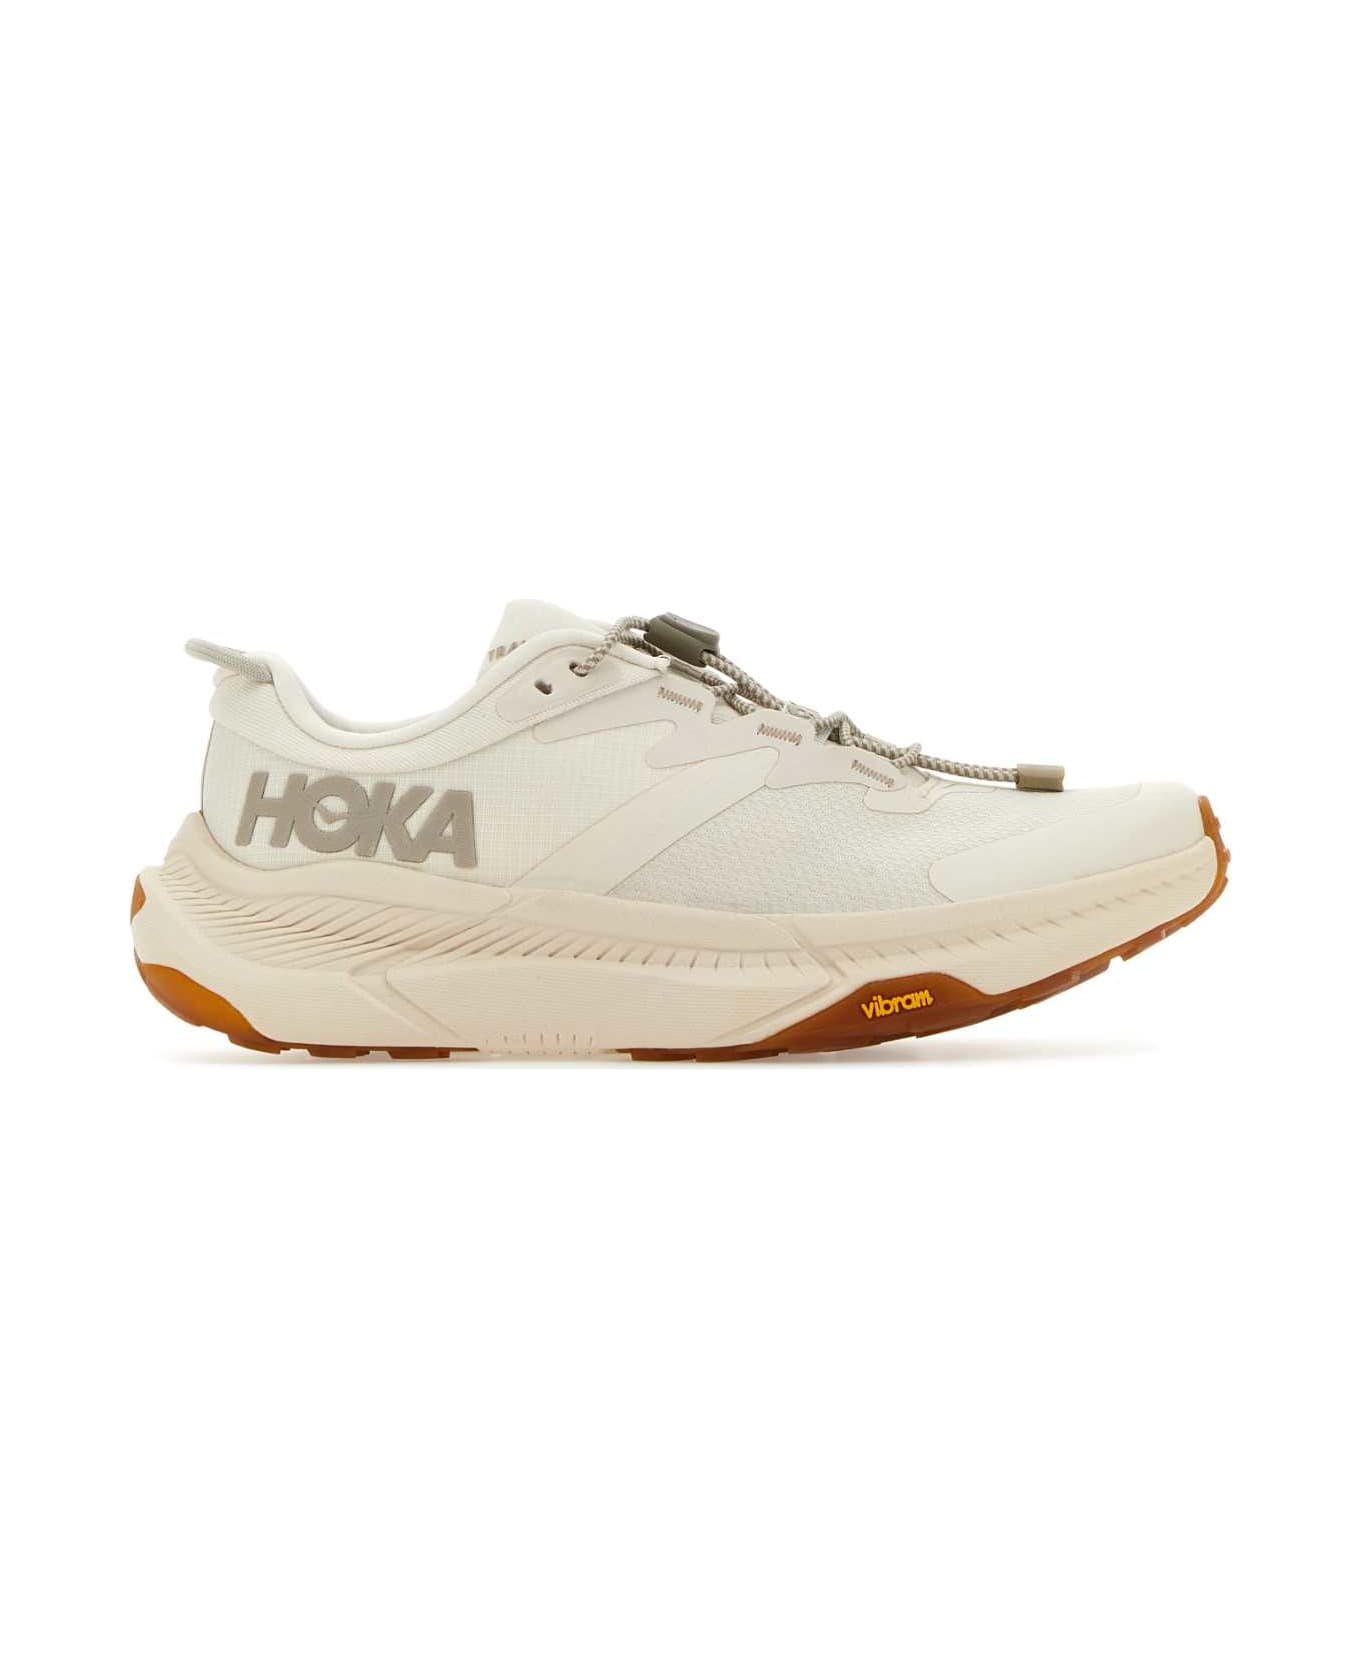 Hoka Ivory Fabric W Transport Sneakers - EGGNOGEGGNOG